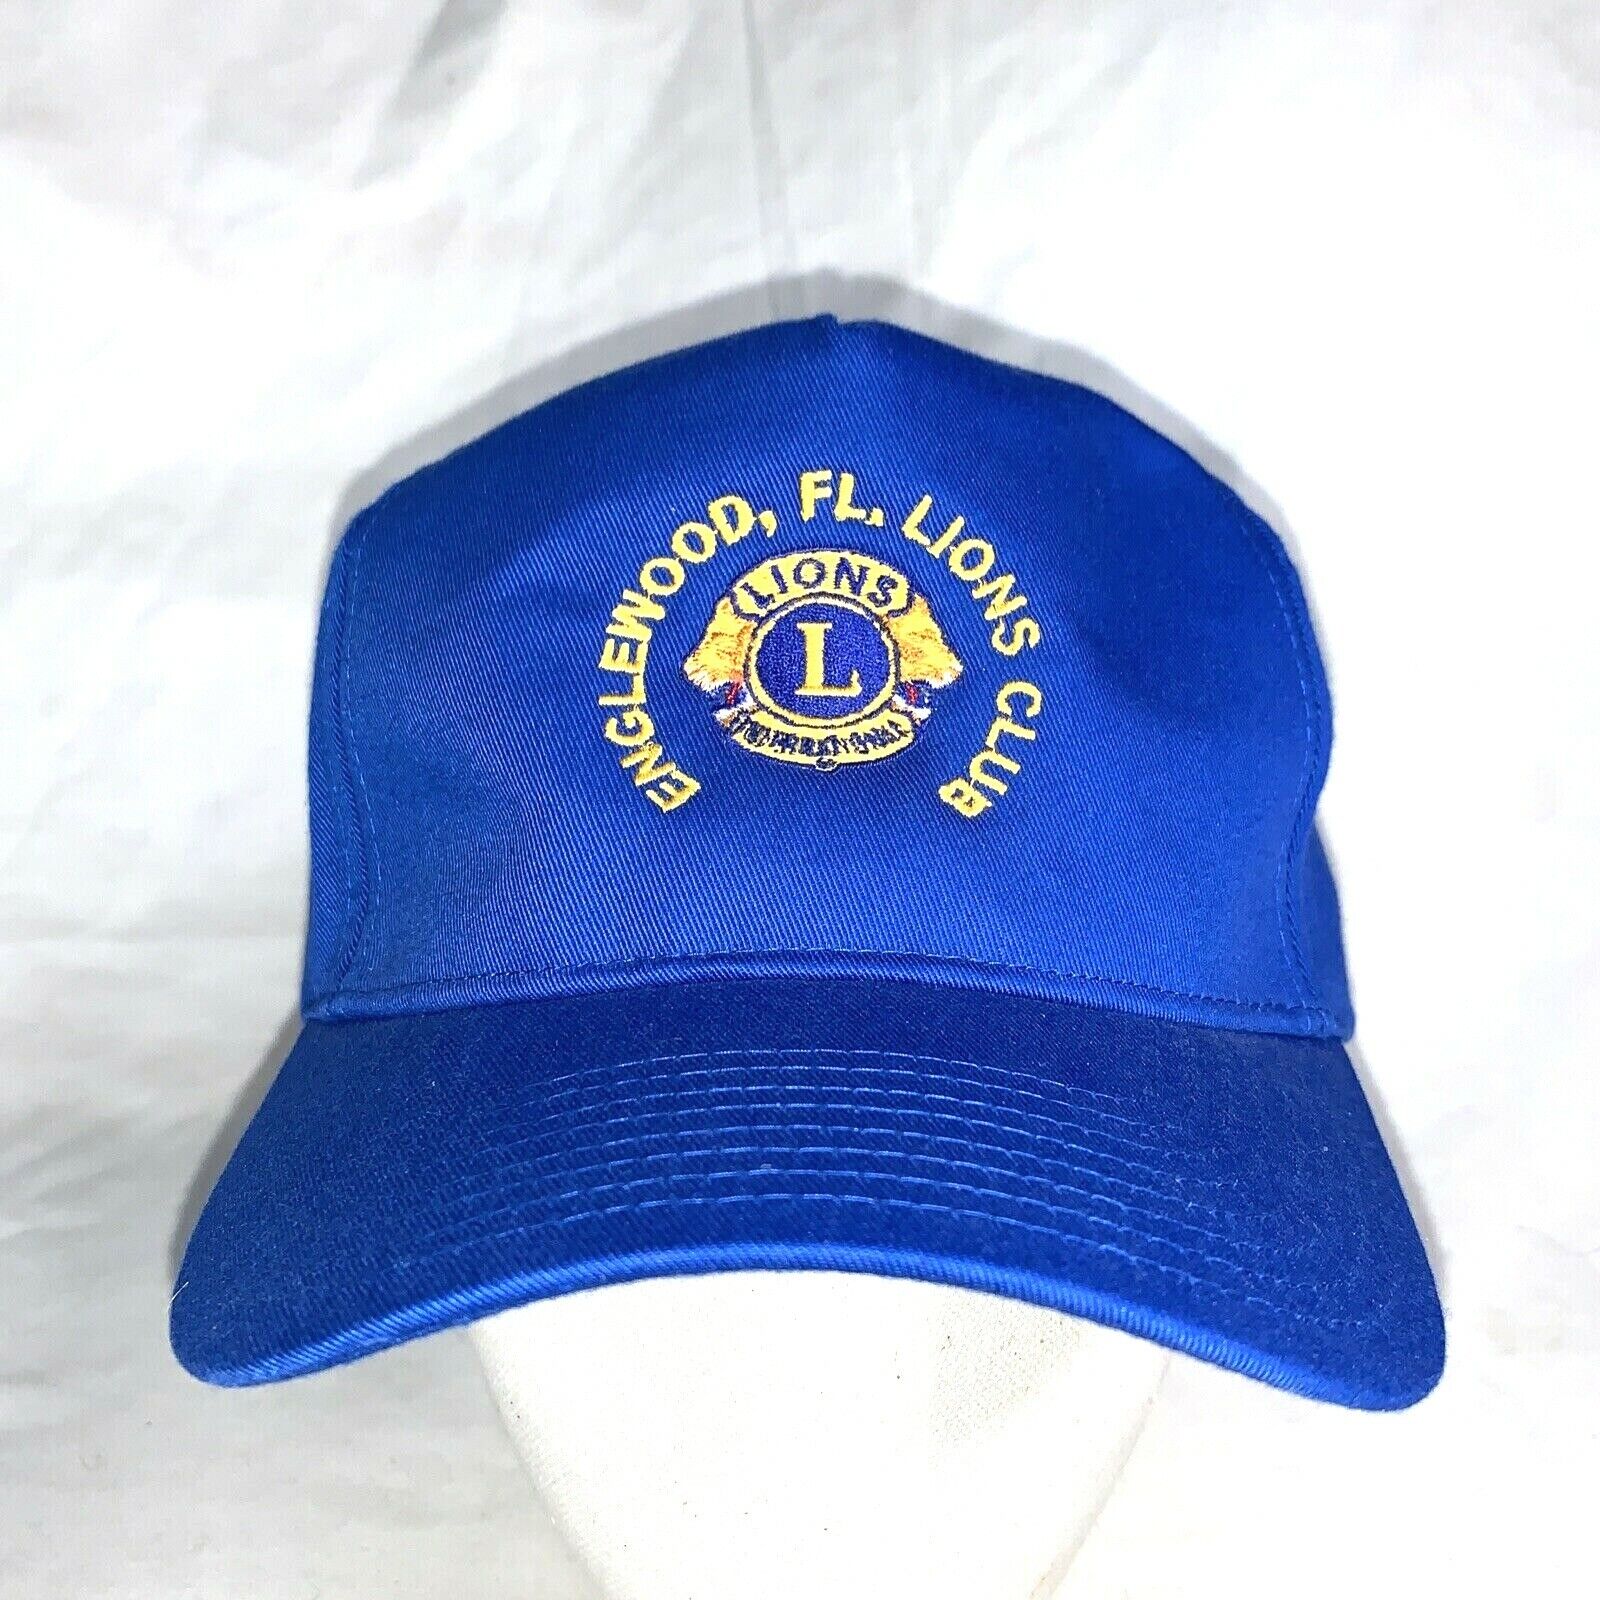 Lions Club Hat Englewood Florida Dad Cap Vintage Embroidered Blue Adjustable